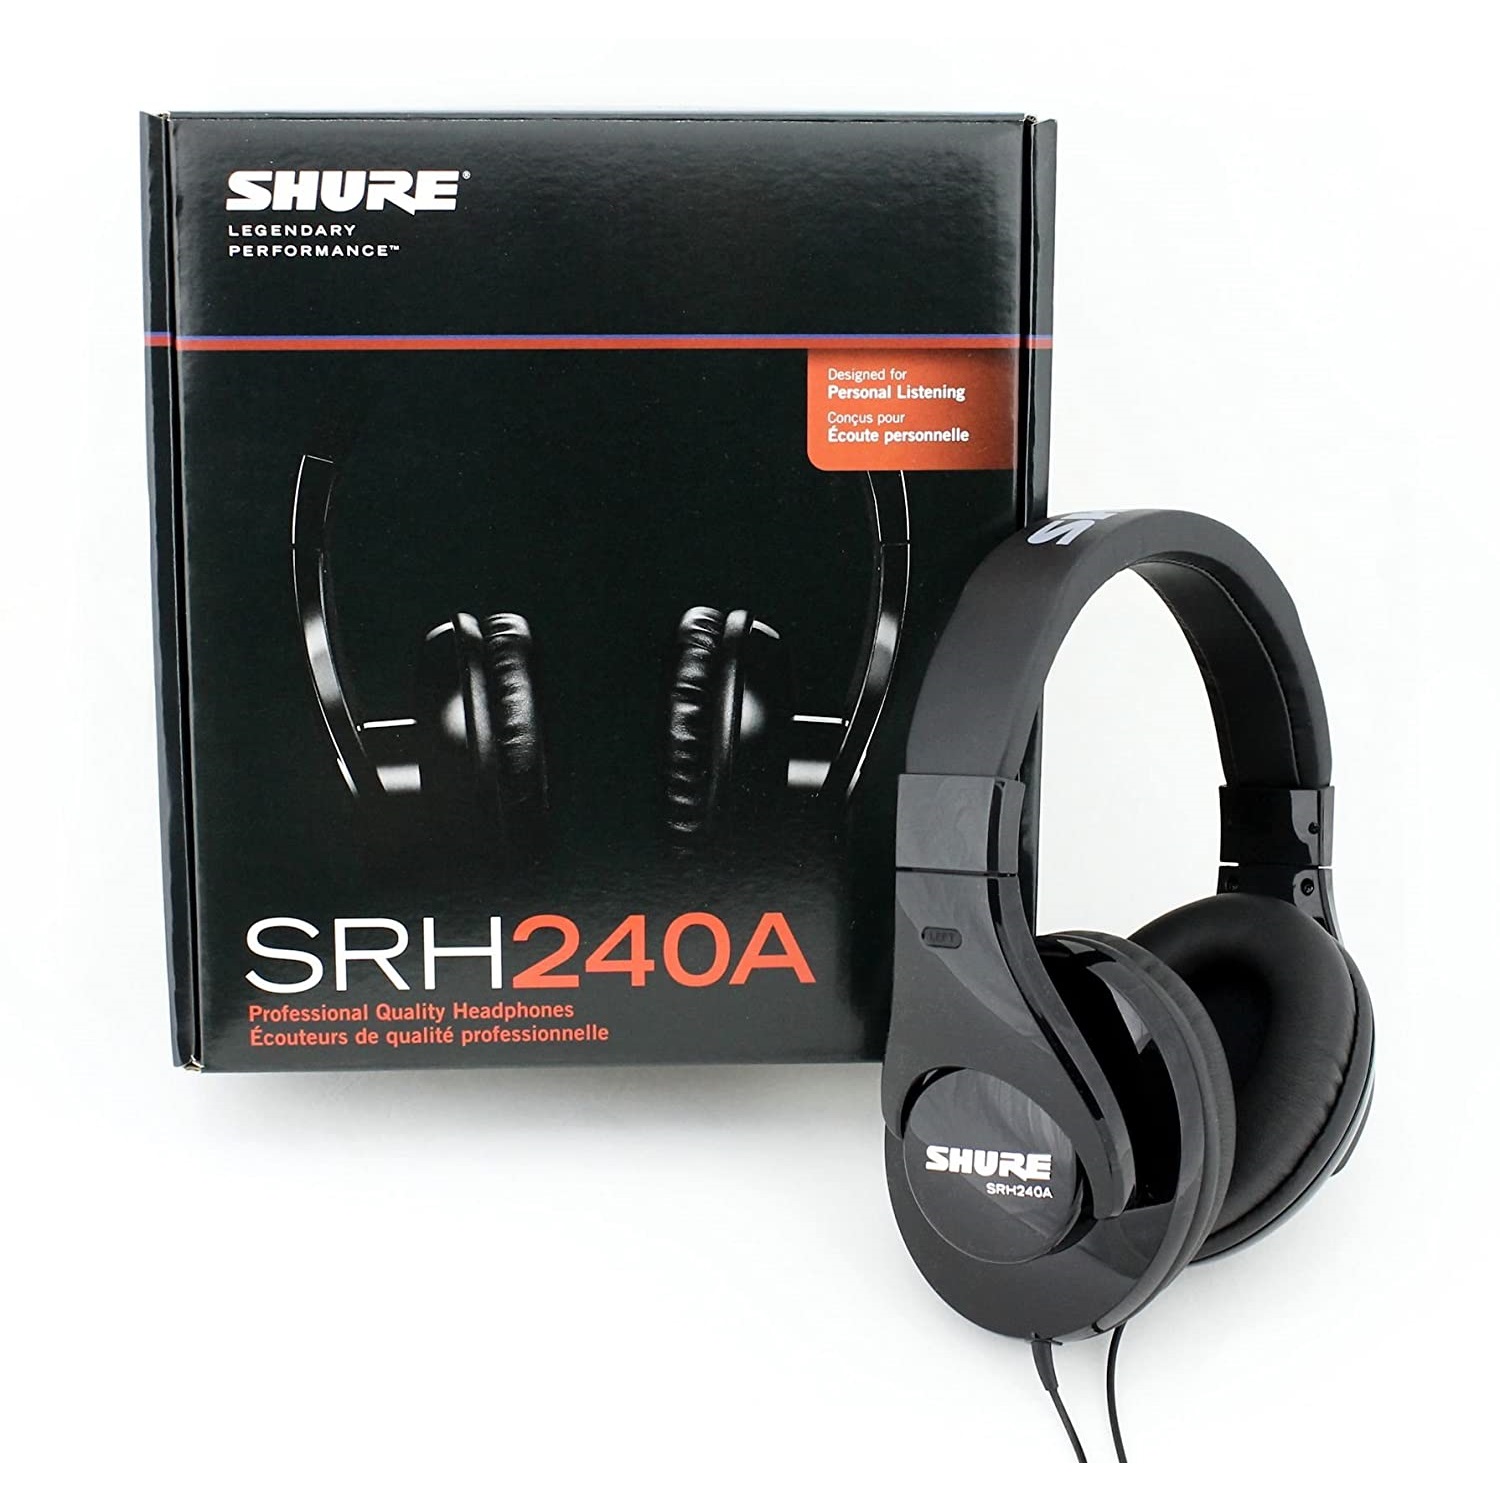 Shure SRH240A Professional Stereo Headphones